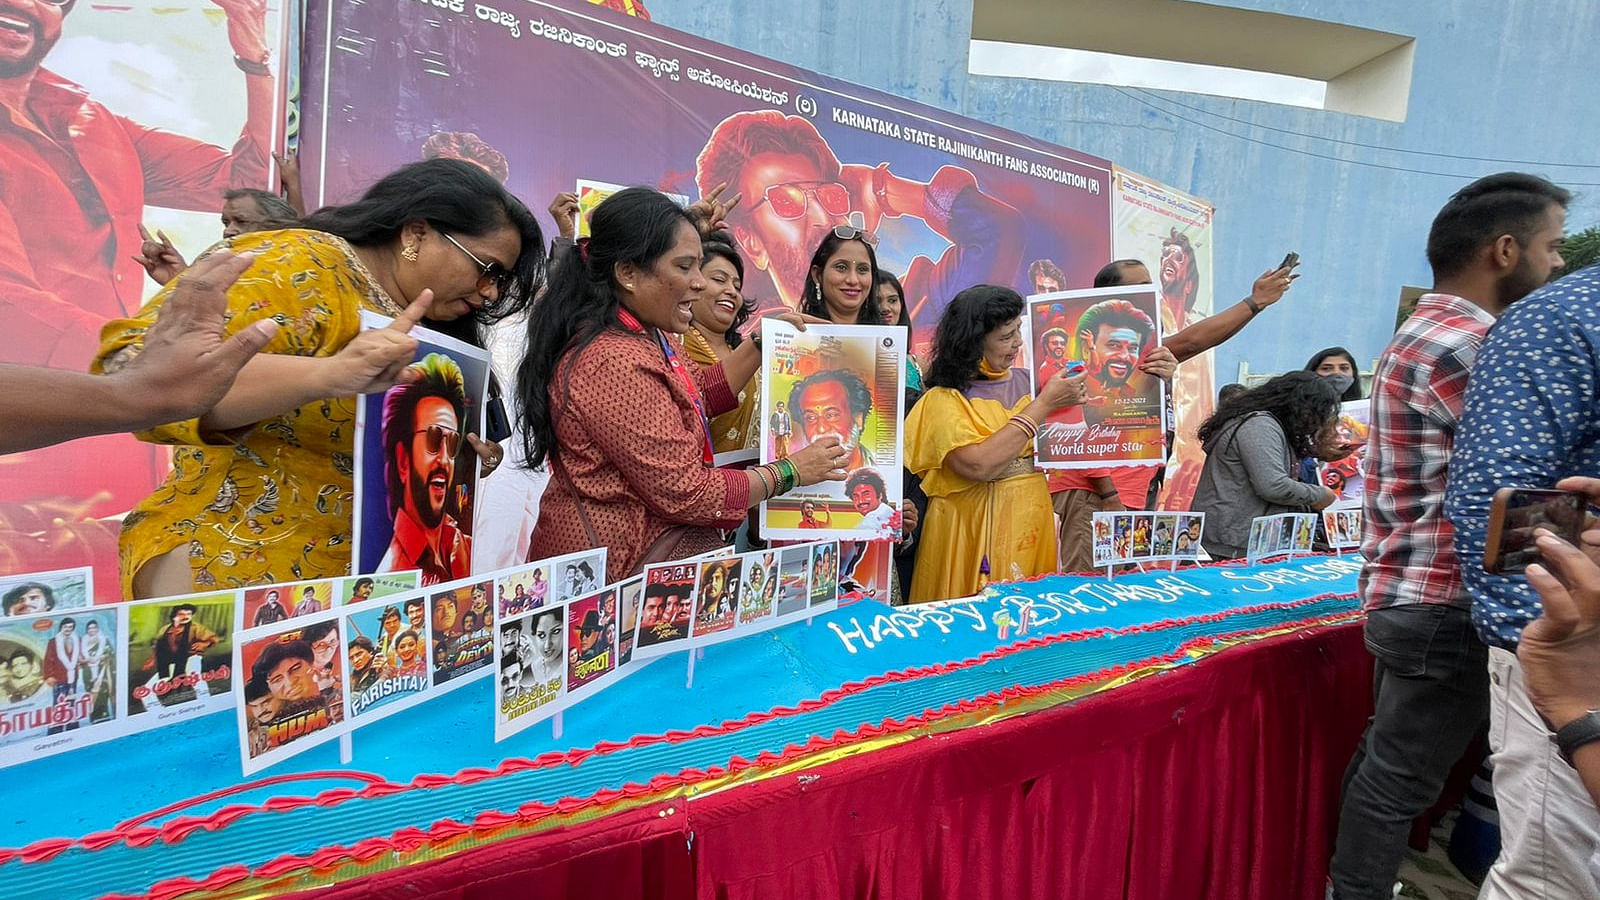 Rajinikanth's fans from Bengaluru cut a 71-feet-long cake weighing 200 kgs to celebrate his birthday. Credit: DH Photo/ Pushkar V